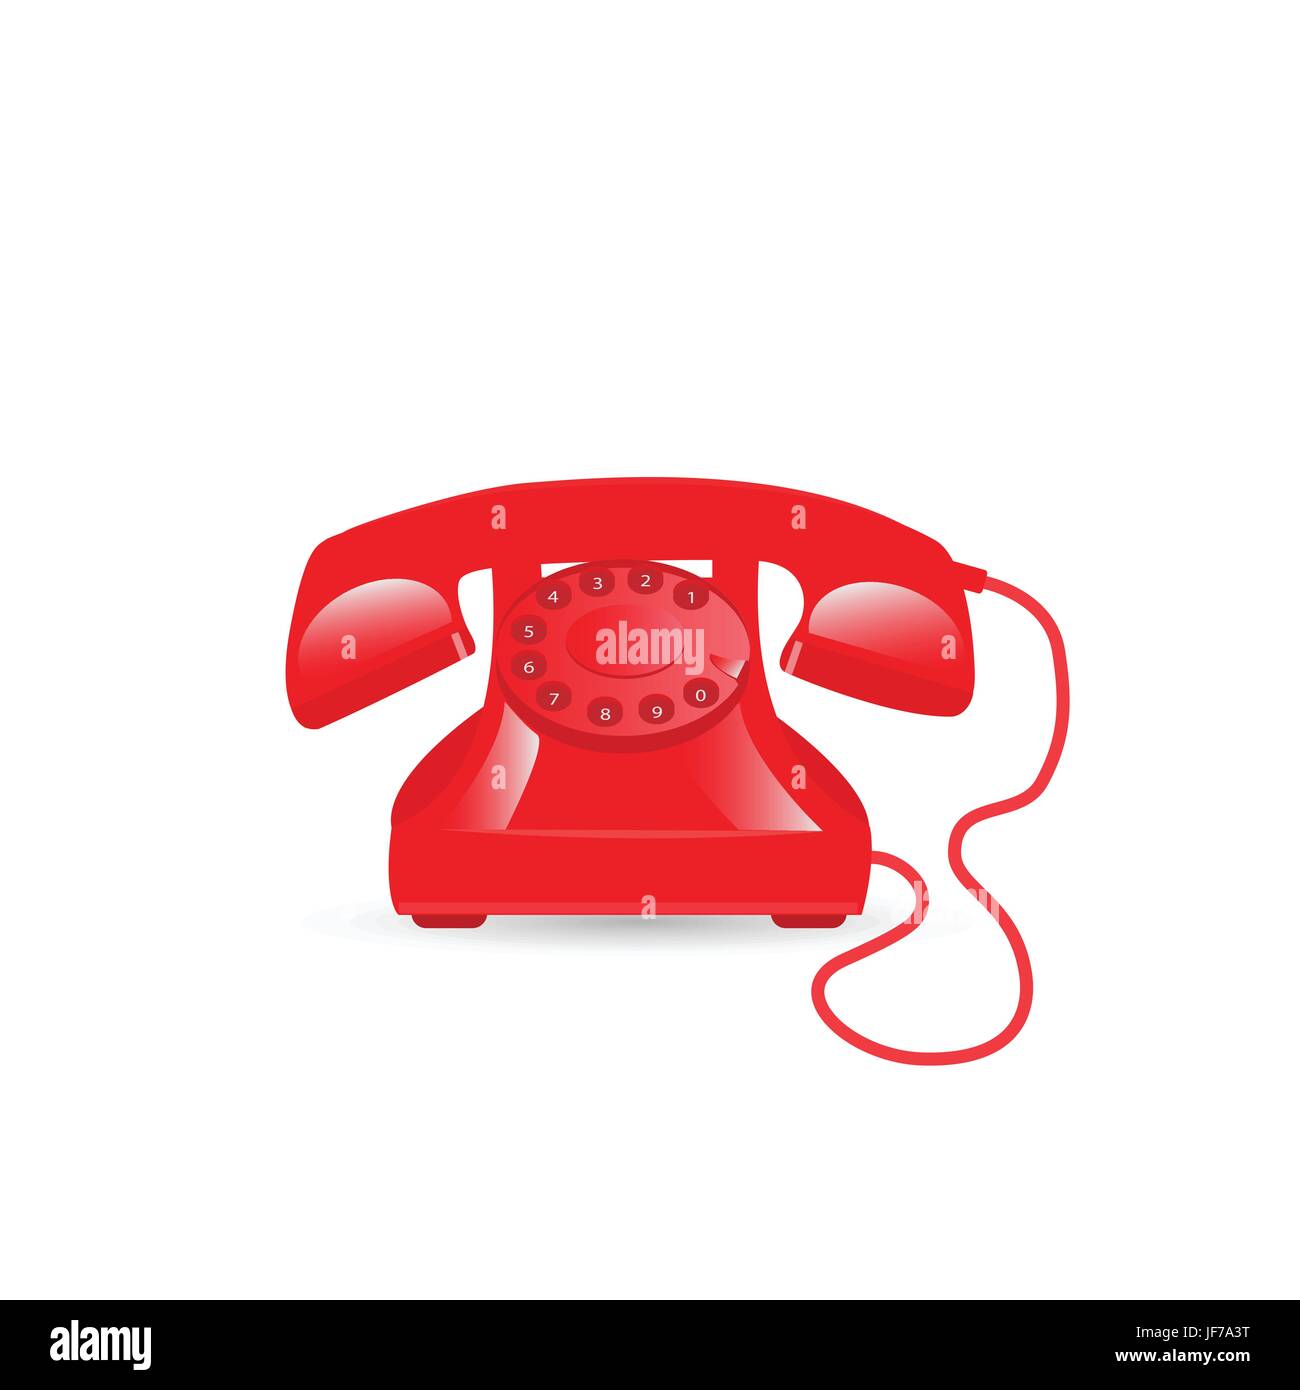 Call, communication, device, phone, retro, telephone icon